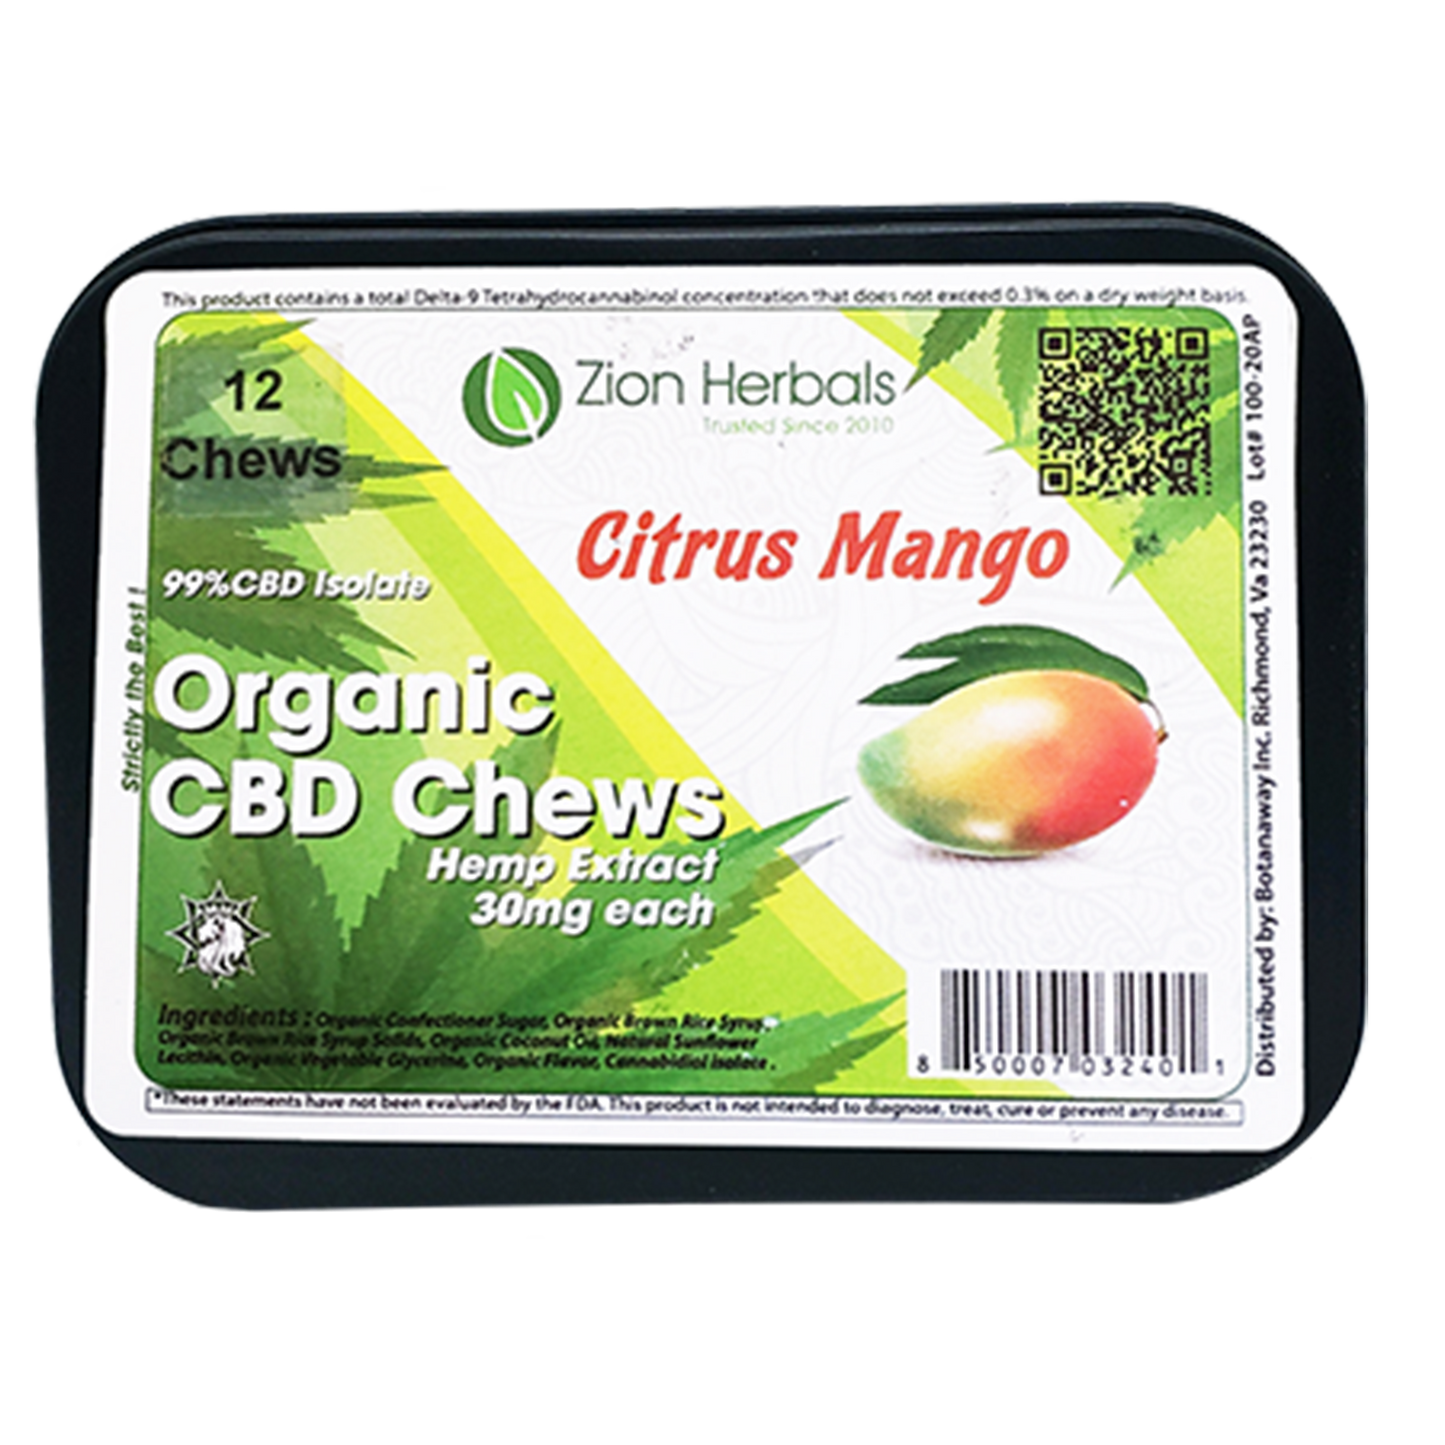 Zion herbals 30mg CBD Extract Chews Mango